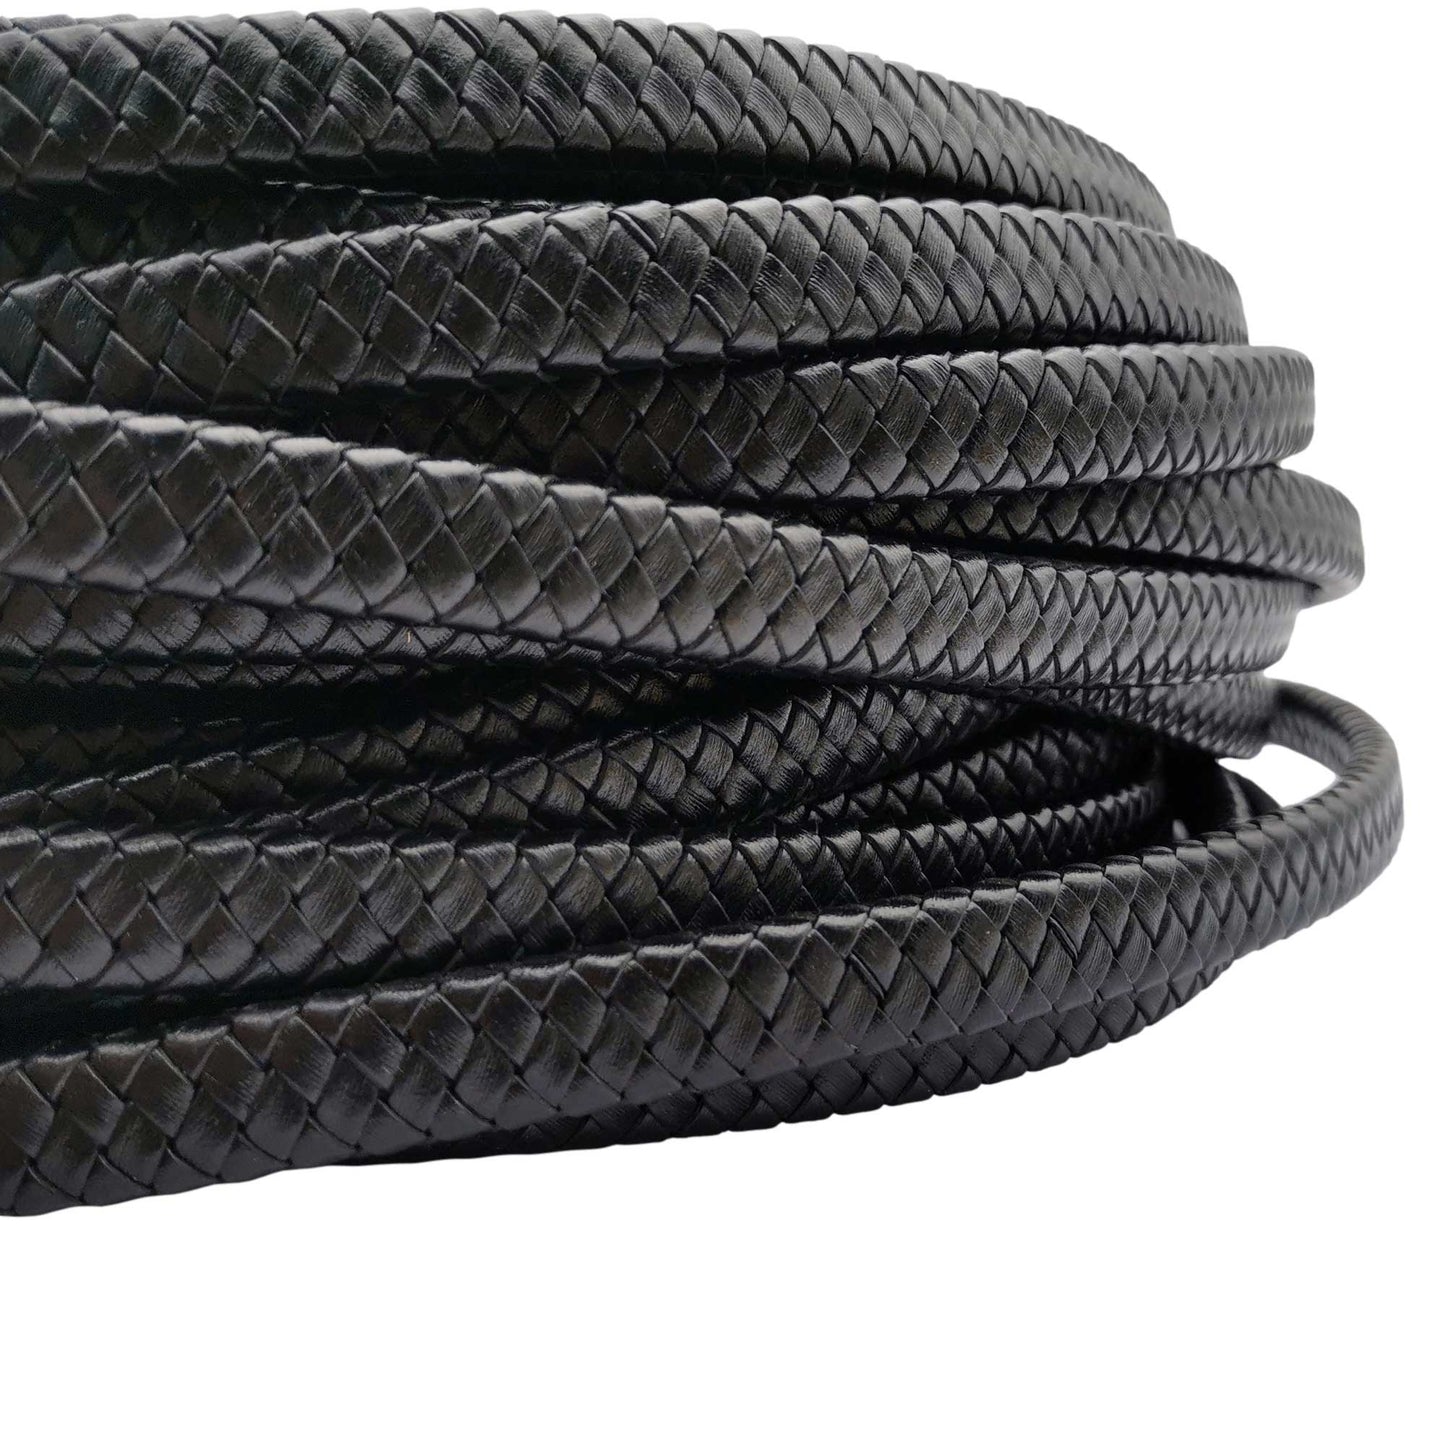 shapesbyX-10mm Flat Braided Leather Band Black 10x5mm Leather Bolo Strip Bracelet Making Craft